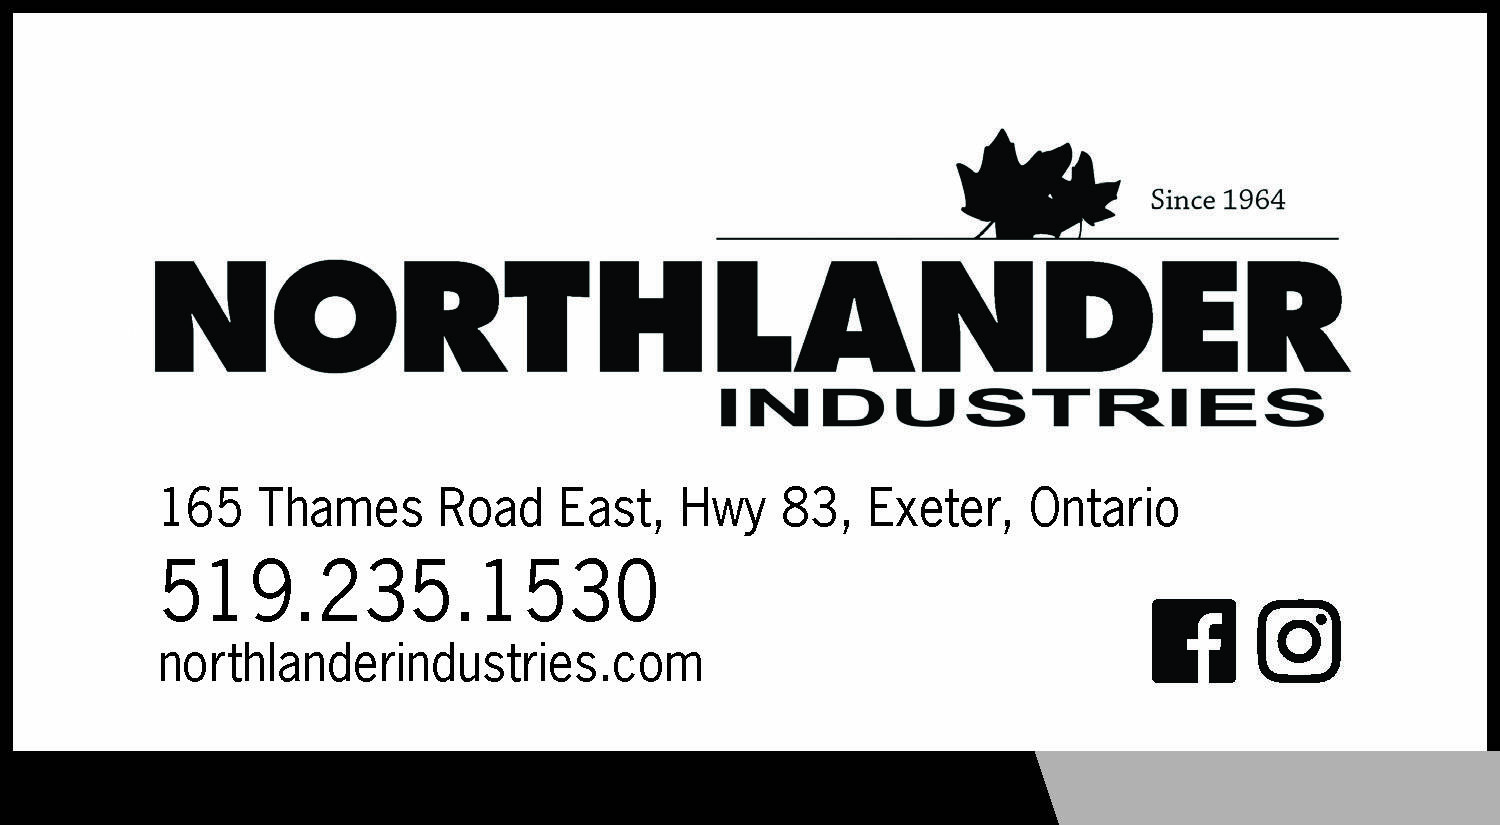 Northlander Industries